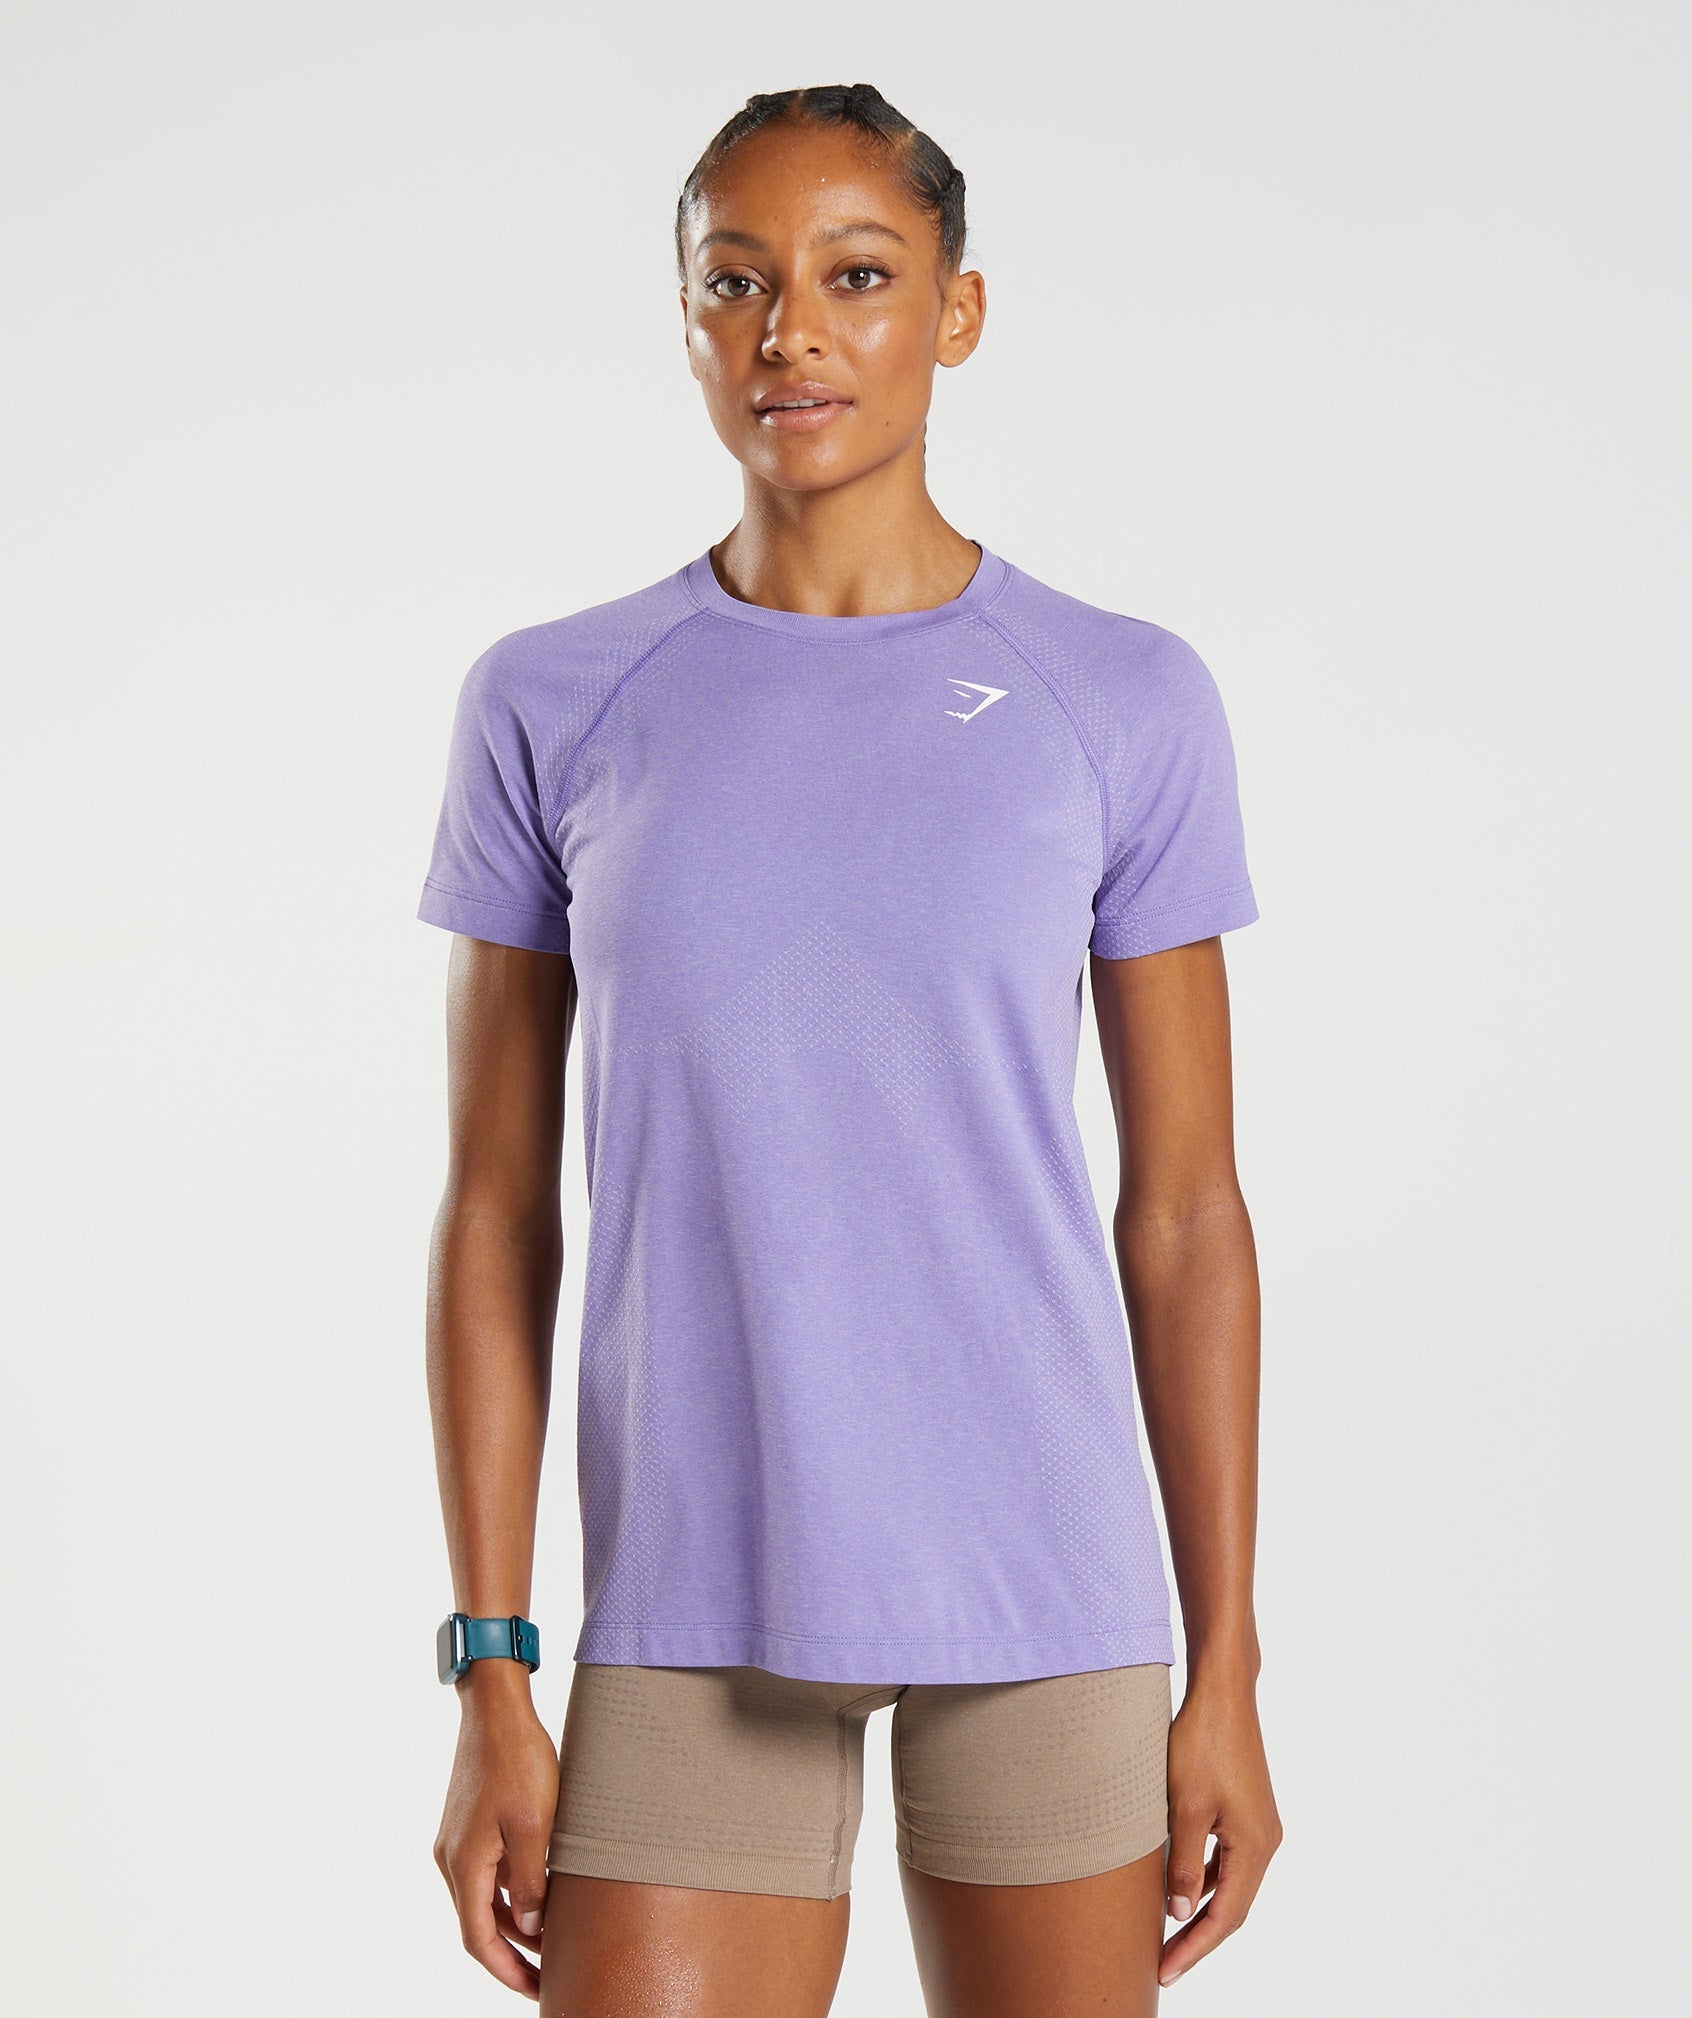 Gymshark Vital Seamless 2.0 Light T-Shirt - Digital Violet Marl